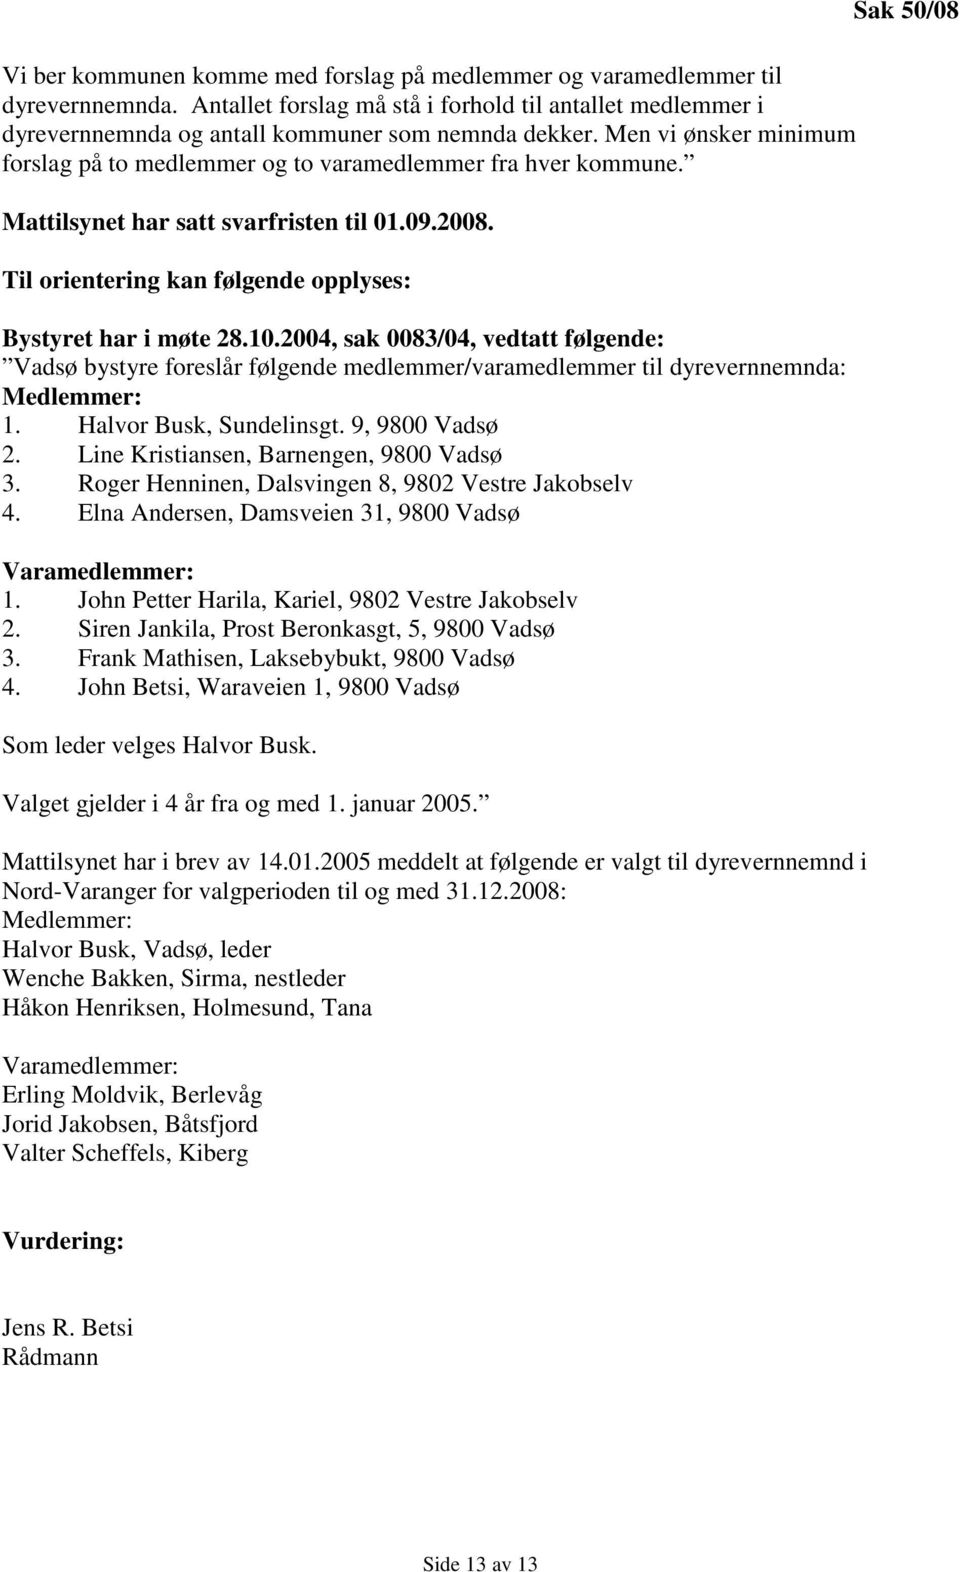 2004, sak 0083/04, vedtatt følgende: Vadsø bystyre foreslår følgende medlemmer/varamedlemmer til dyrevernnemnda: Medlemmer: 1. Halvor Busk, Sundelinsgt. 9, 9800 Vadsø 2.